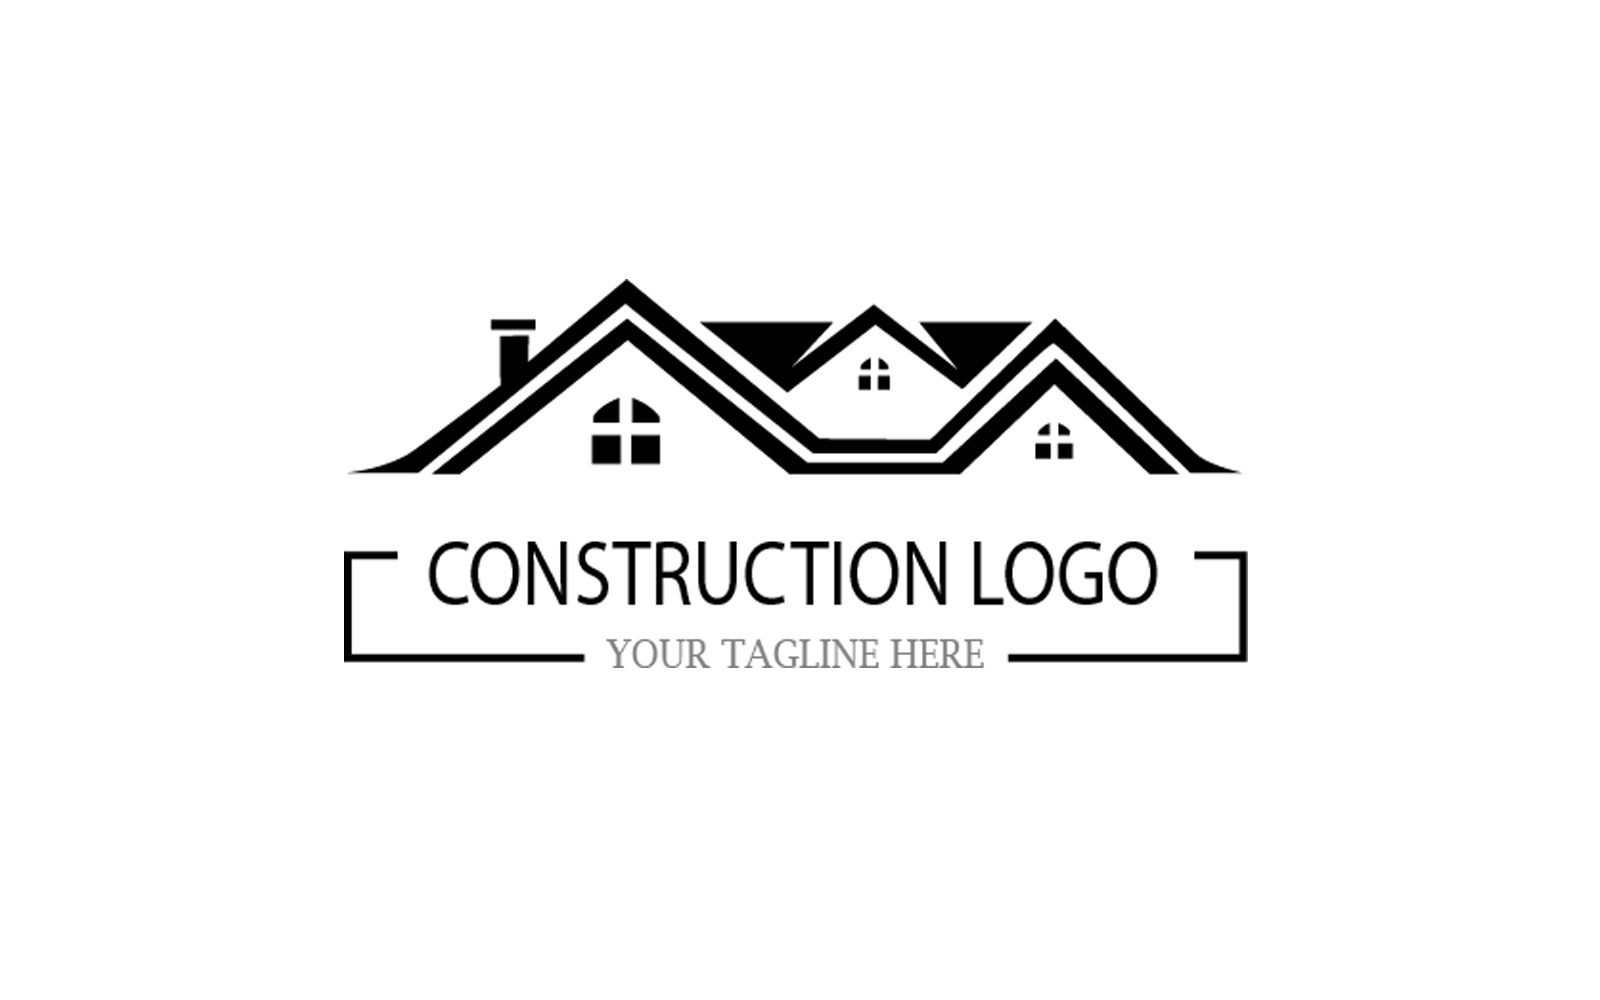 Construction Logo Design For All Company